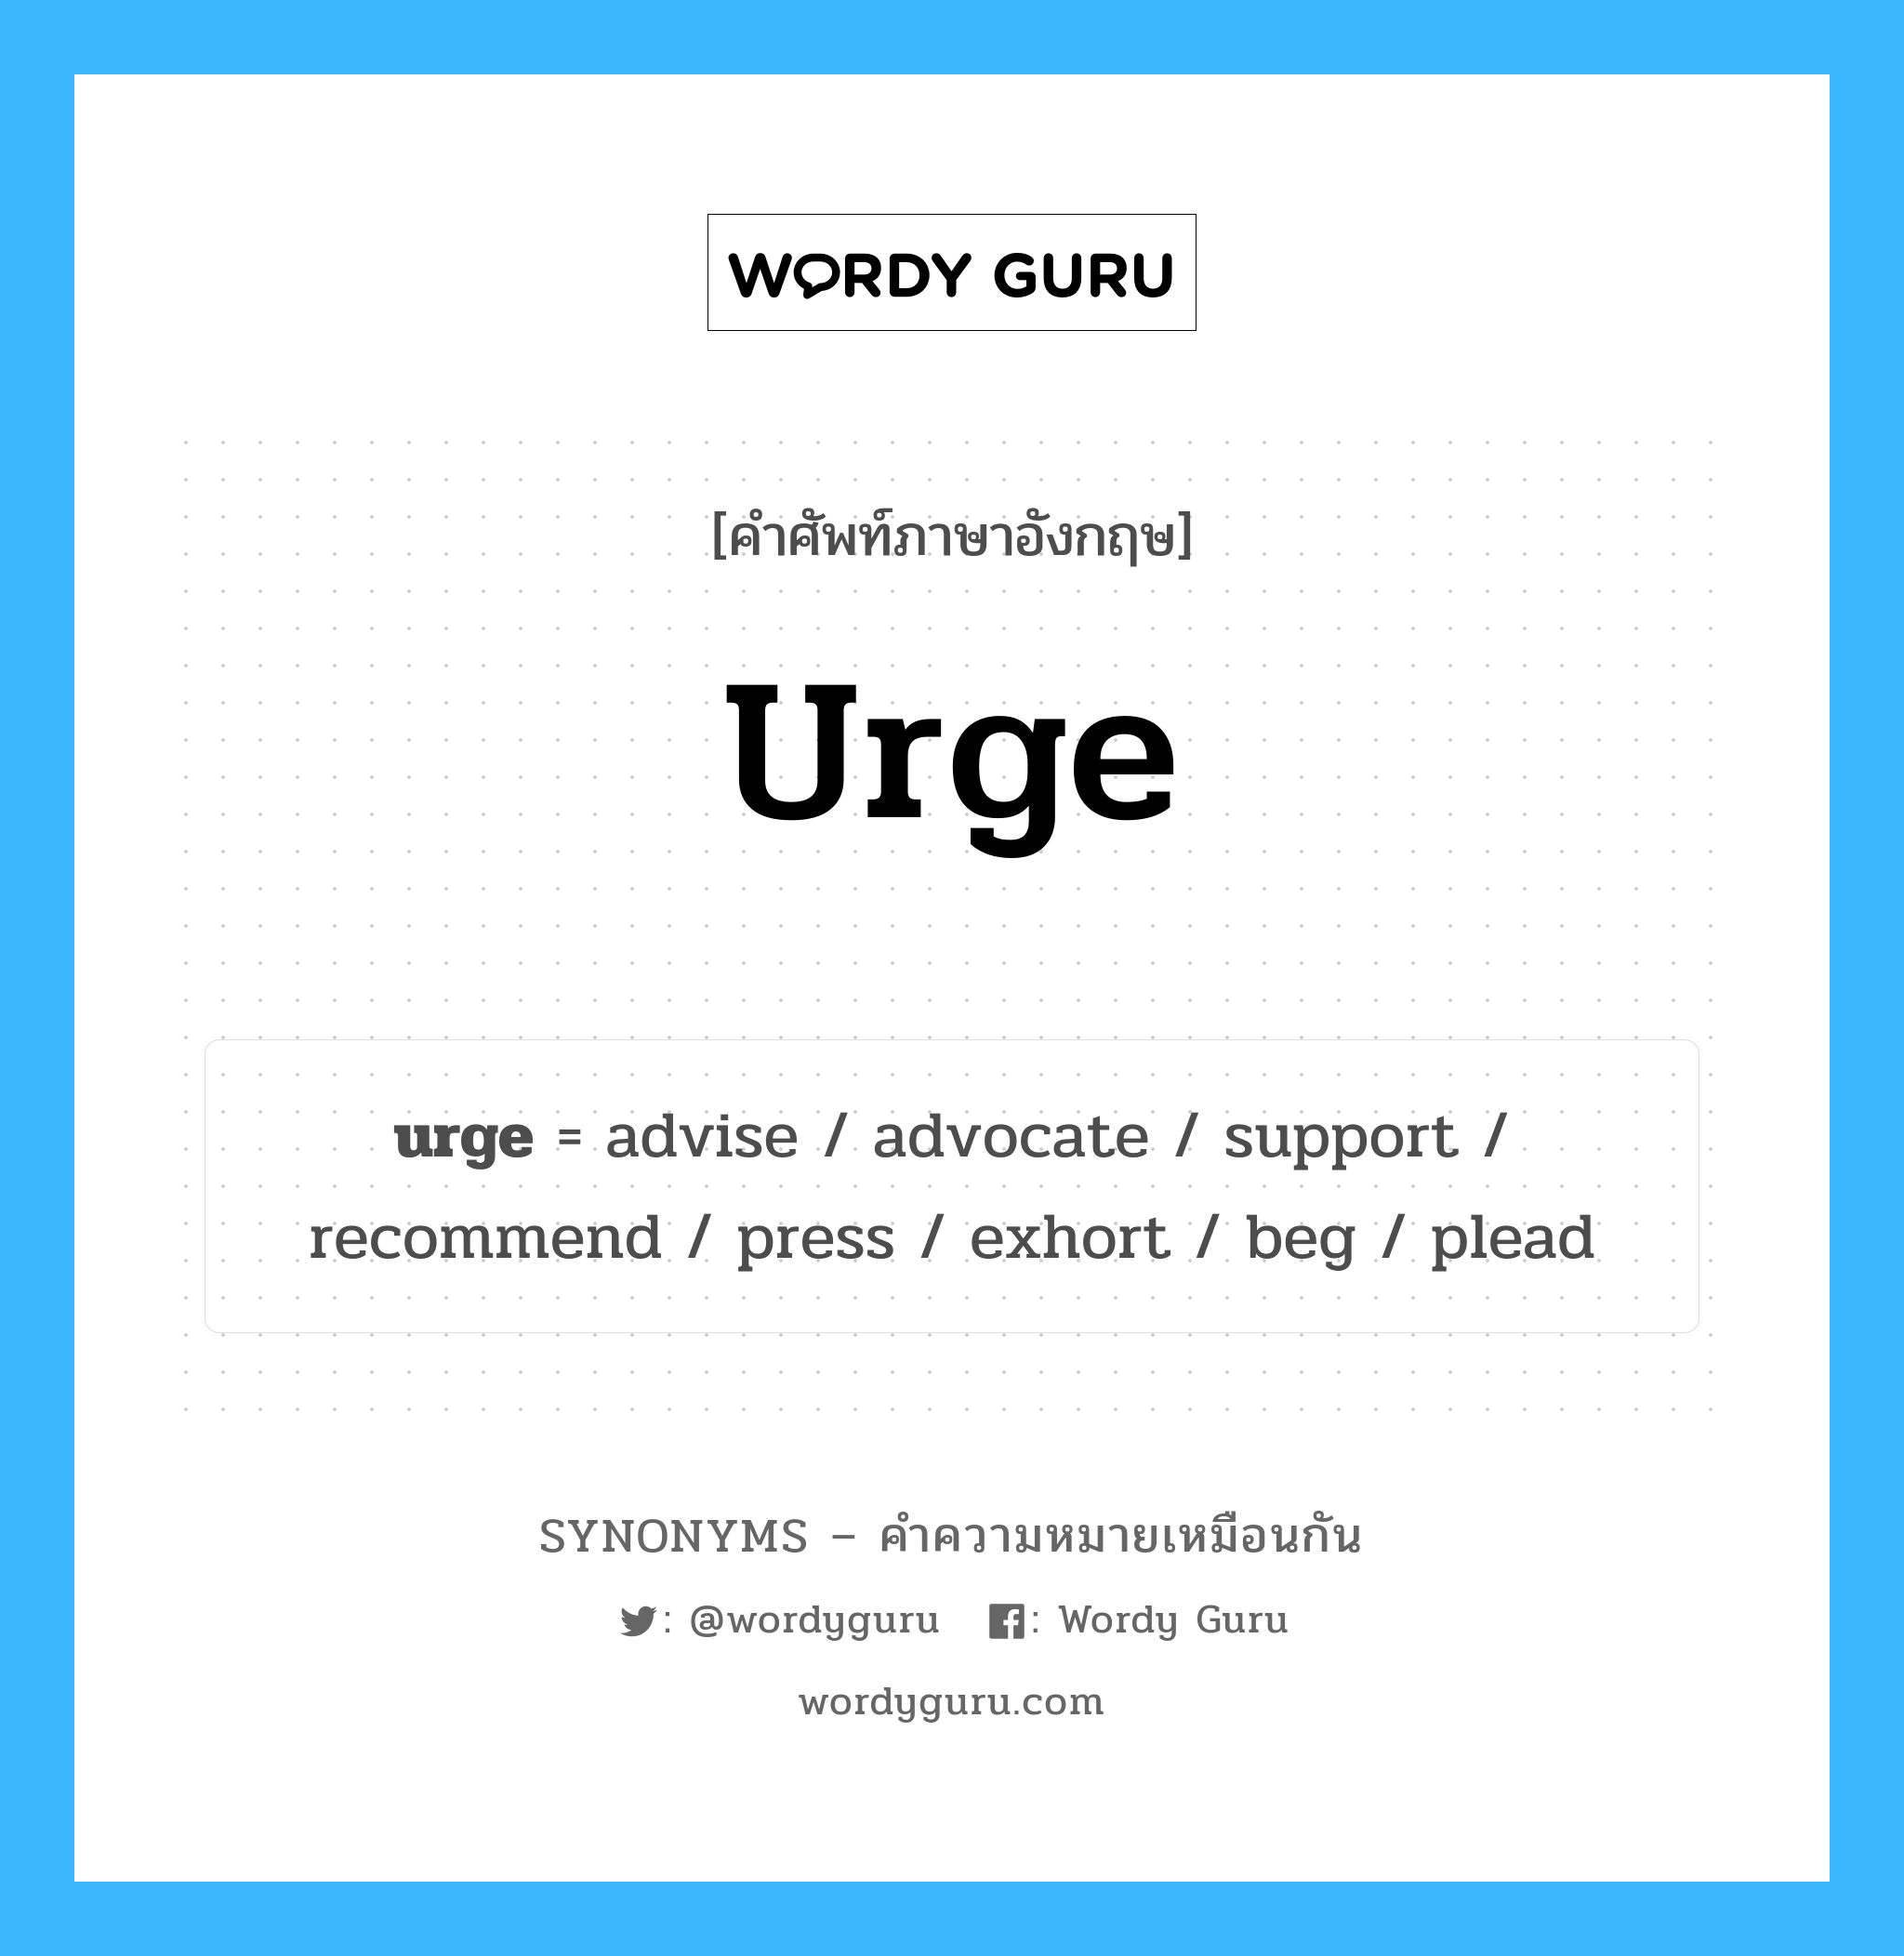 recommend เป็นหนึ่งใน urge และมีคำอื่น ๆ อีกดังนี้, คำศัพท์ภาษาอังกฤษ recommend ความหมายคล้ายกันกับ urge แปลว่า แนะนำ หมวด urge